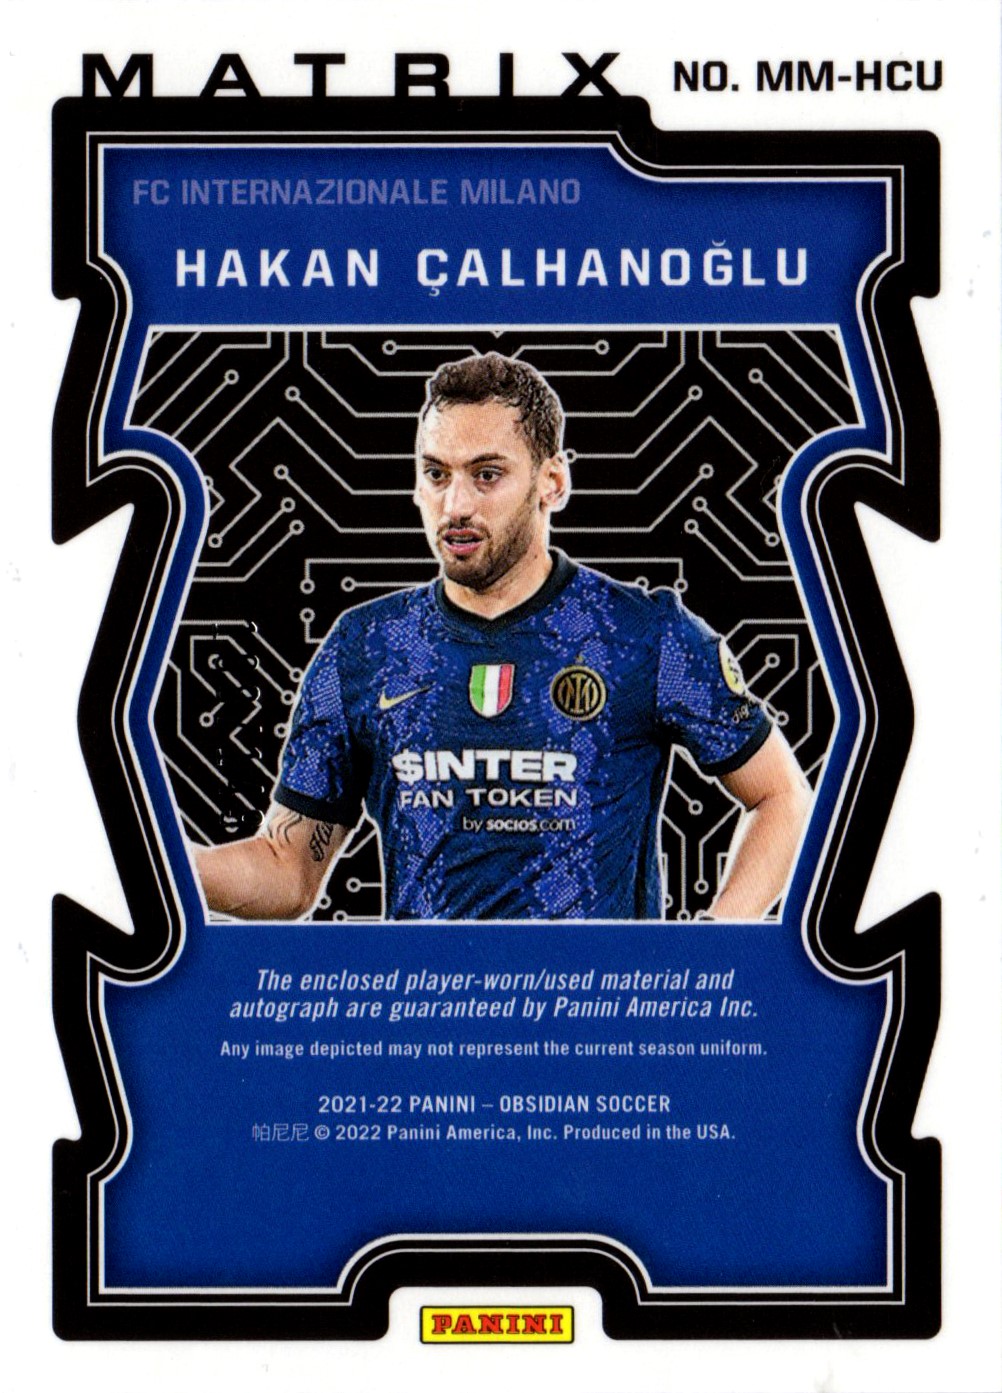 Hakan Calhanoglu - Inter - Panini Obsidian Soccer Matrix Patch 